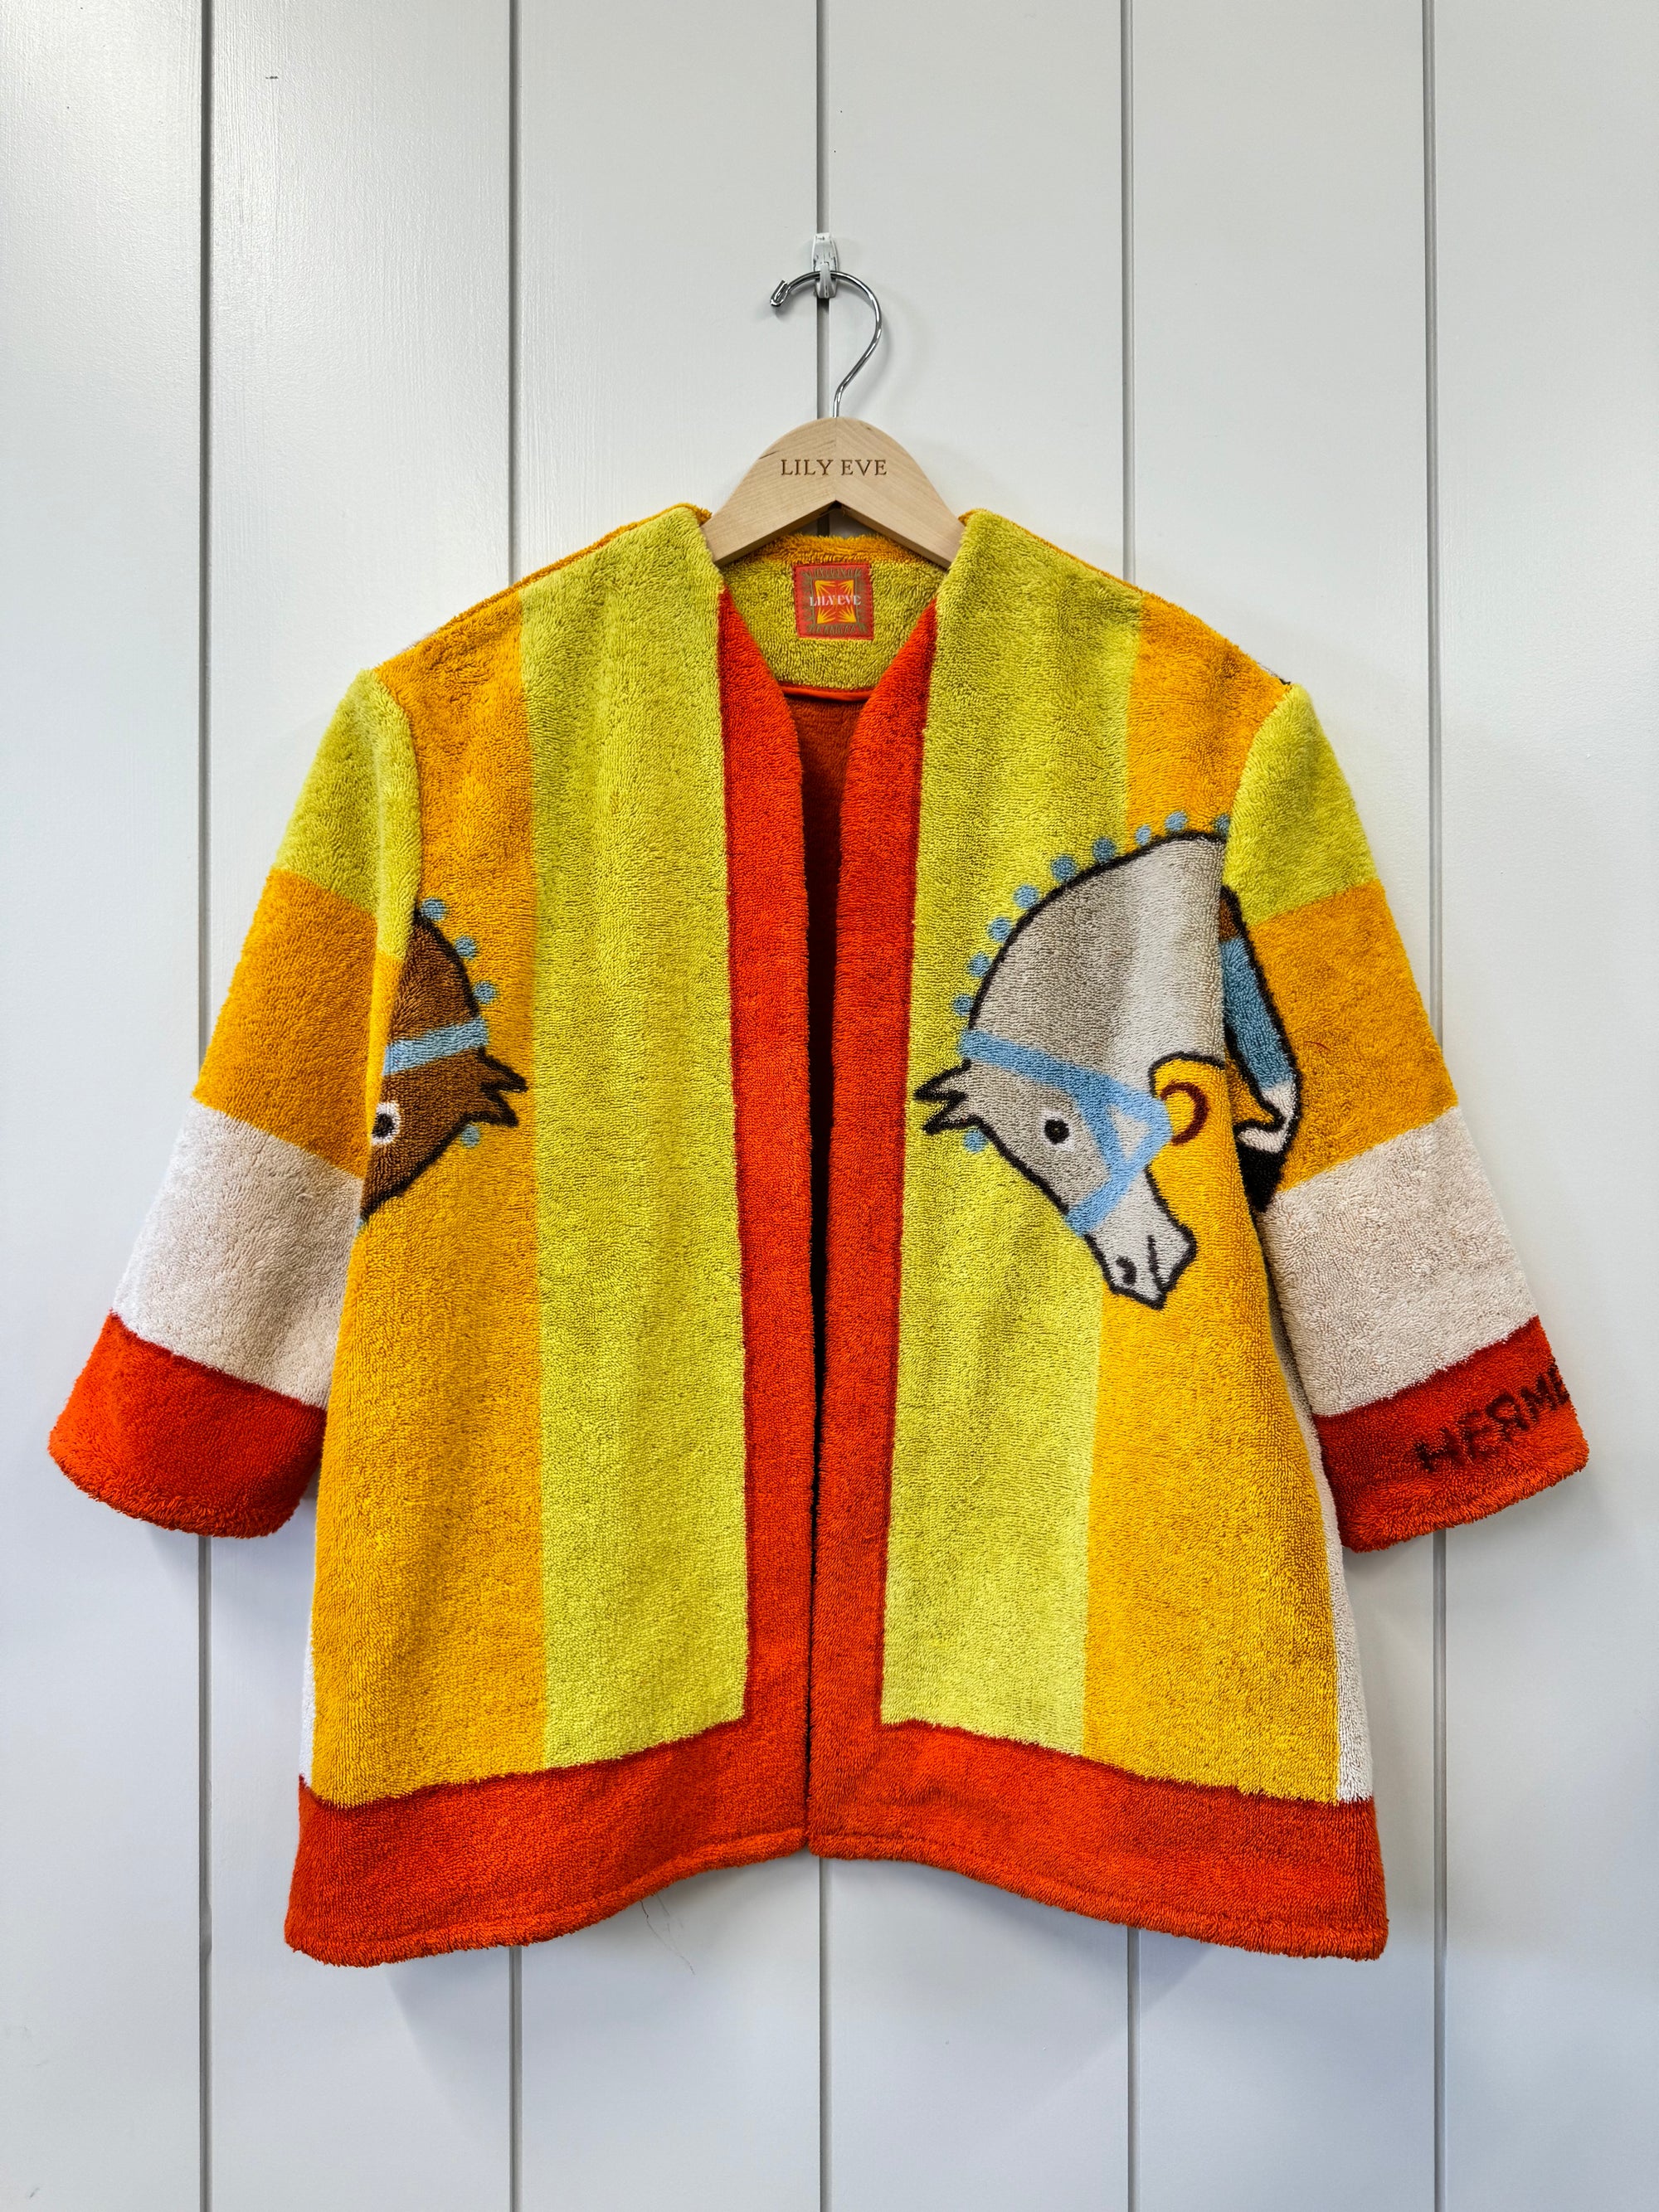 The Yellow Horse Jacket